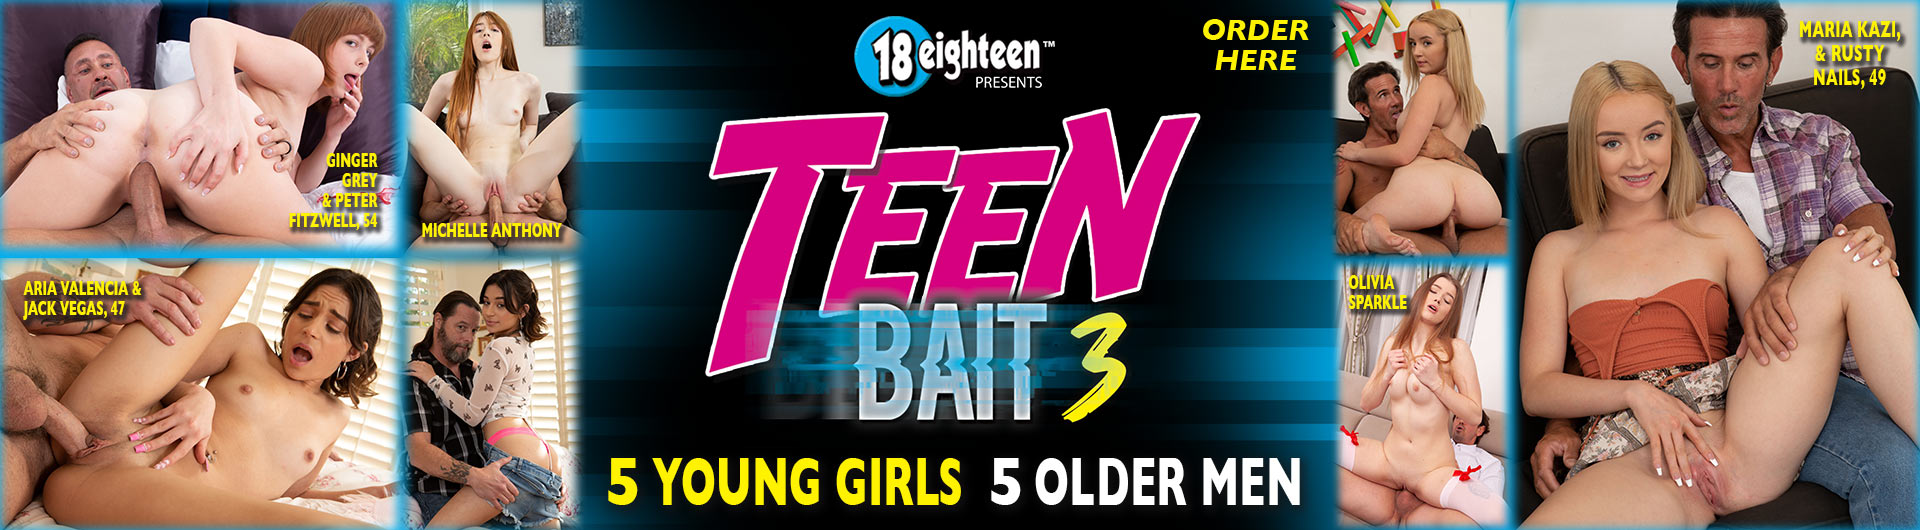 eBoobStore promo TeenBait3